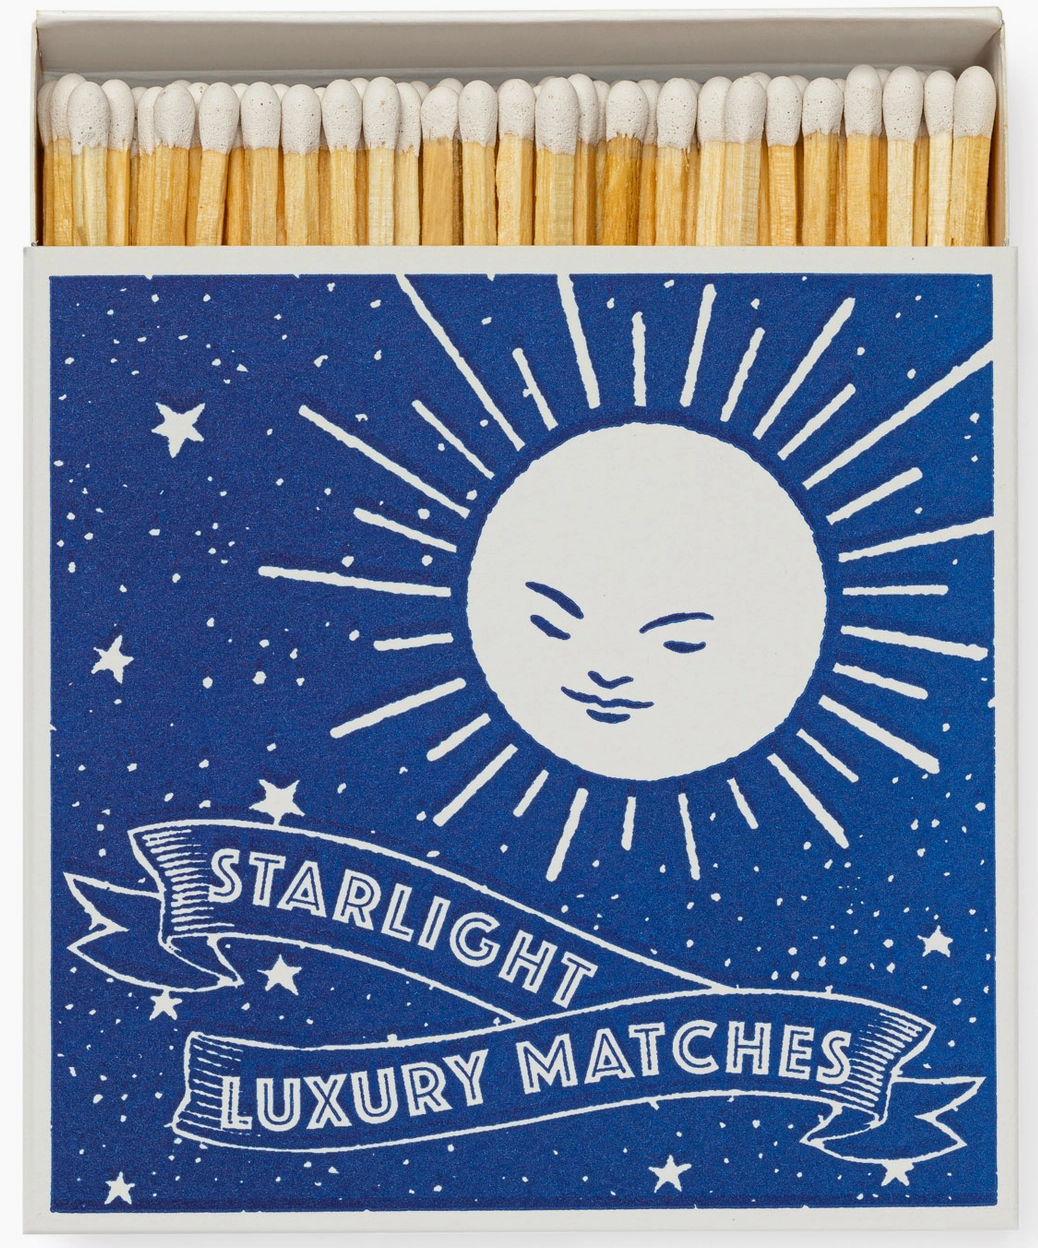 Archivist Matches - Starlight